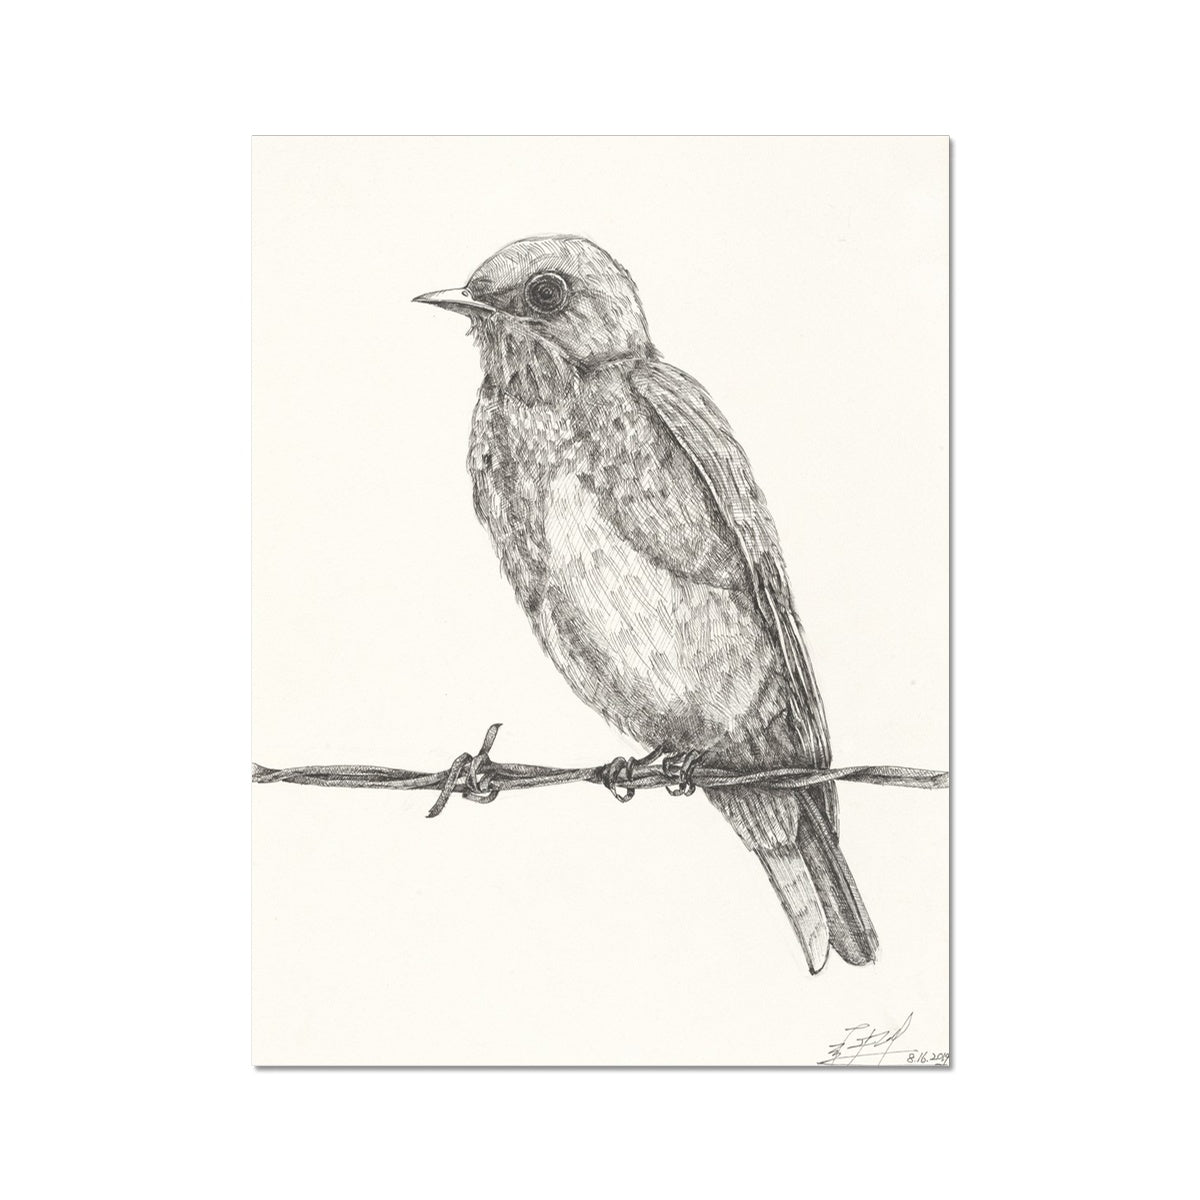 The Bird 1 Fine Art Print